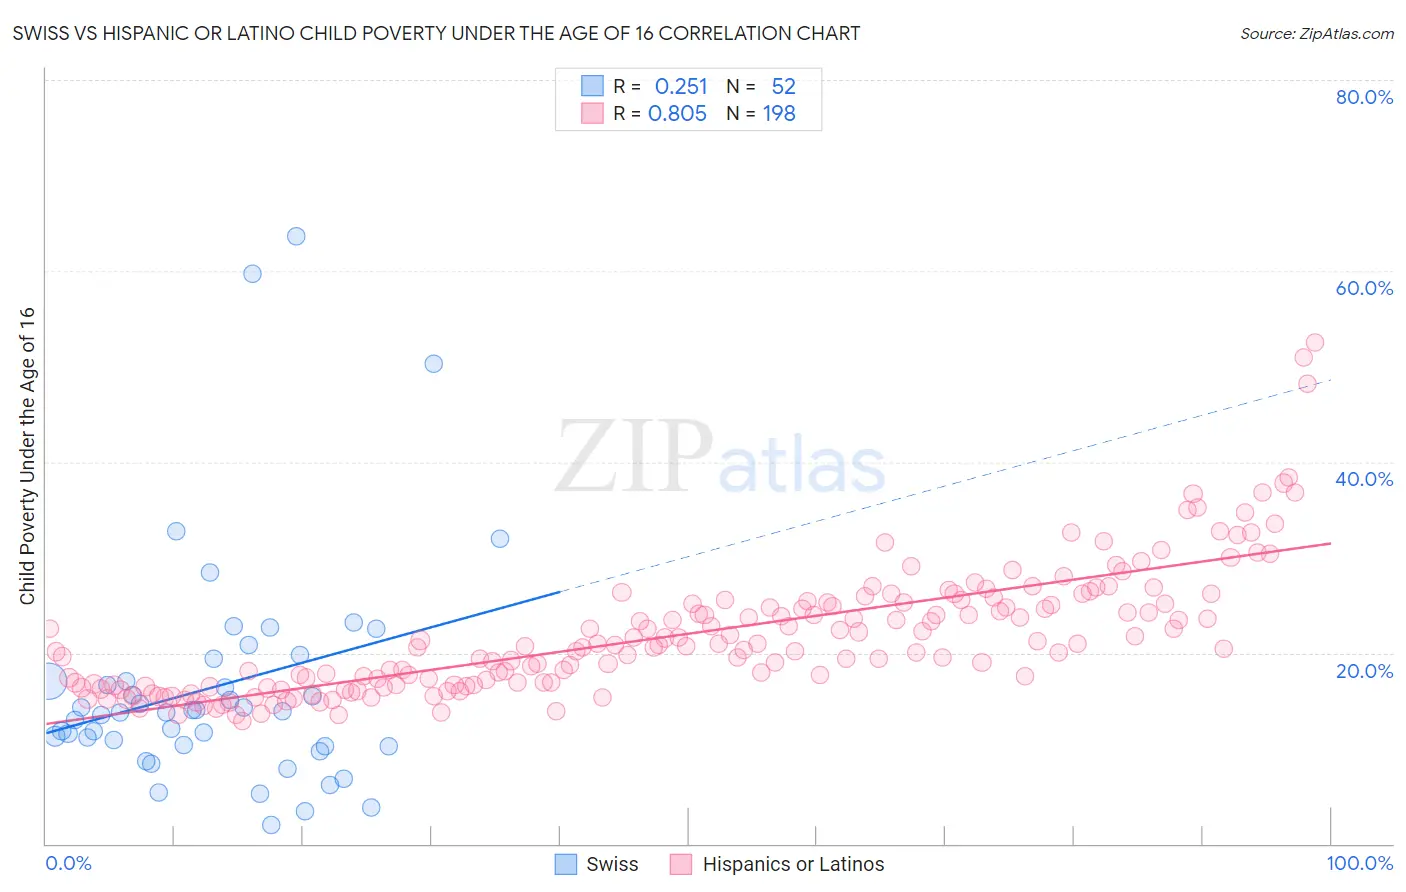 Swiss vs Hispanic or Latino Child Poverty Under the Age of 16